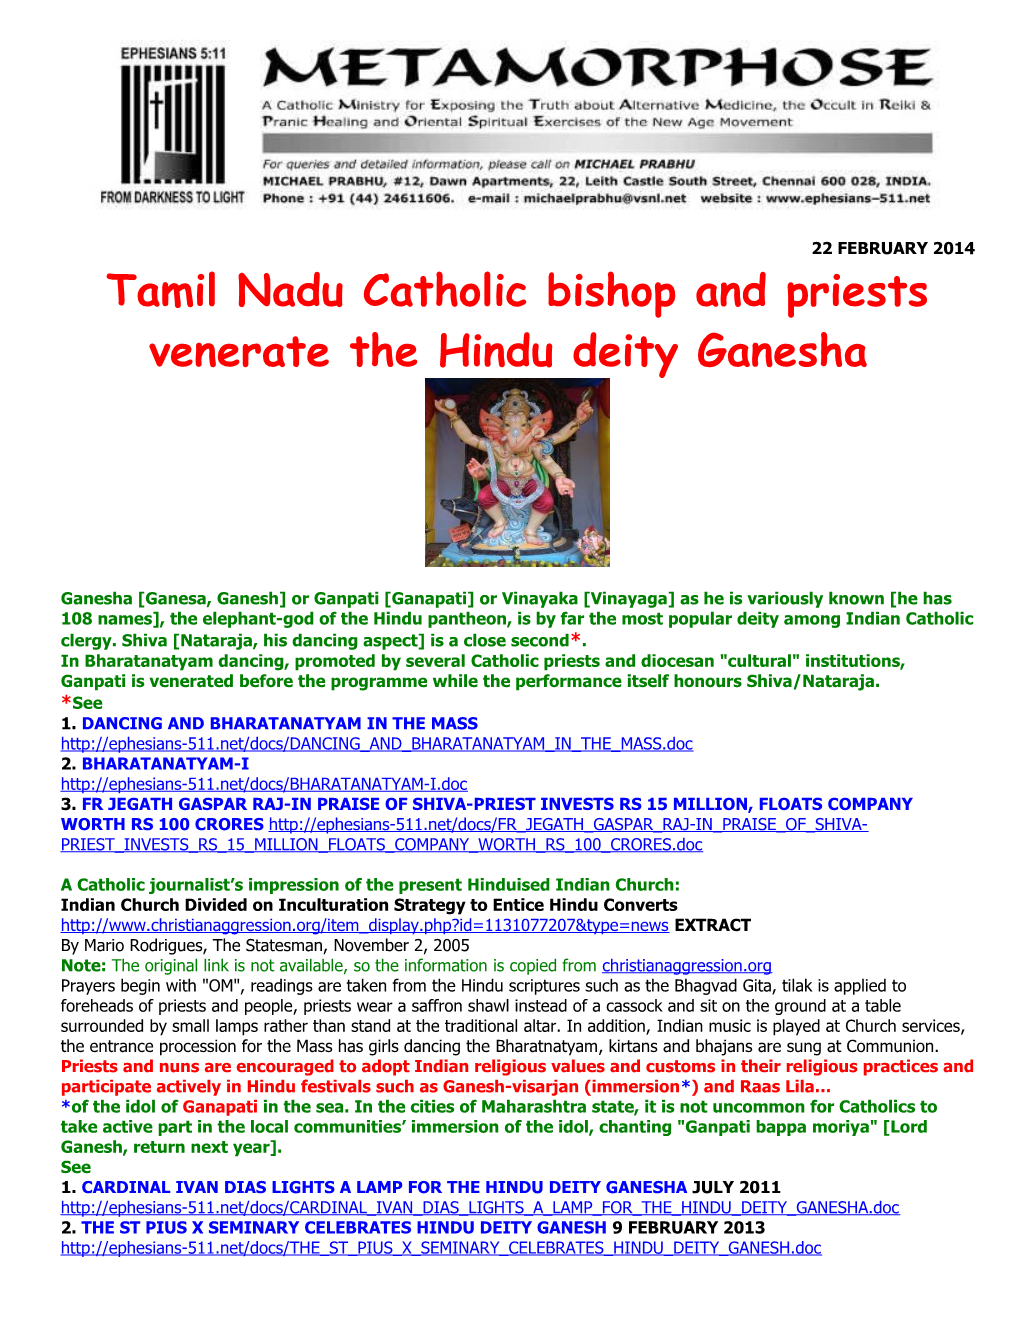 Tamil Nadu Catholic Bishop and Priests Venerate the Hindu Deity Ganesha